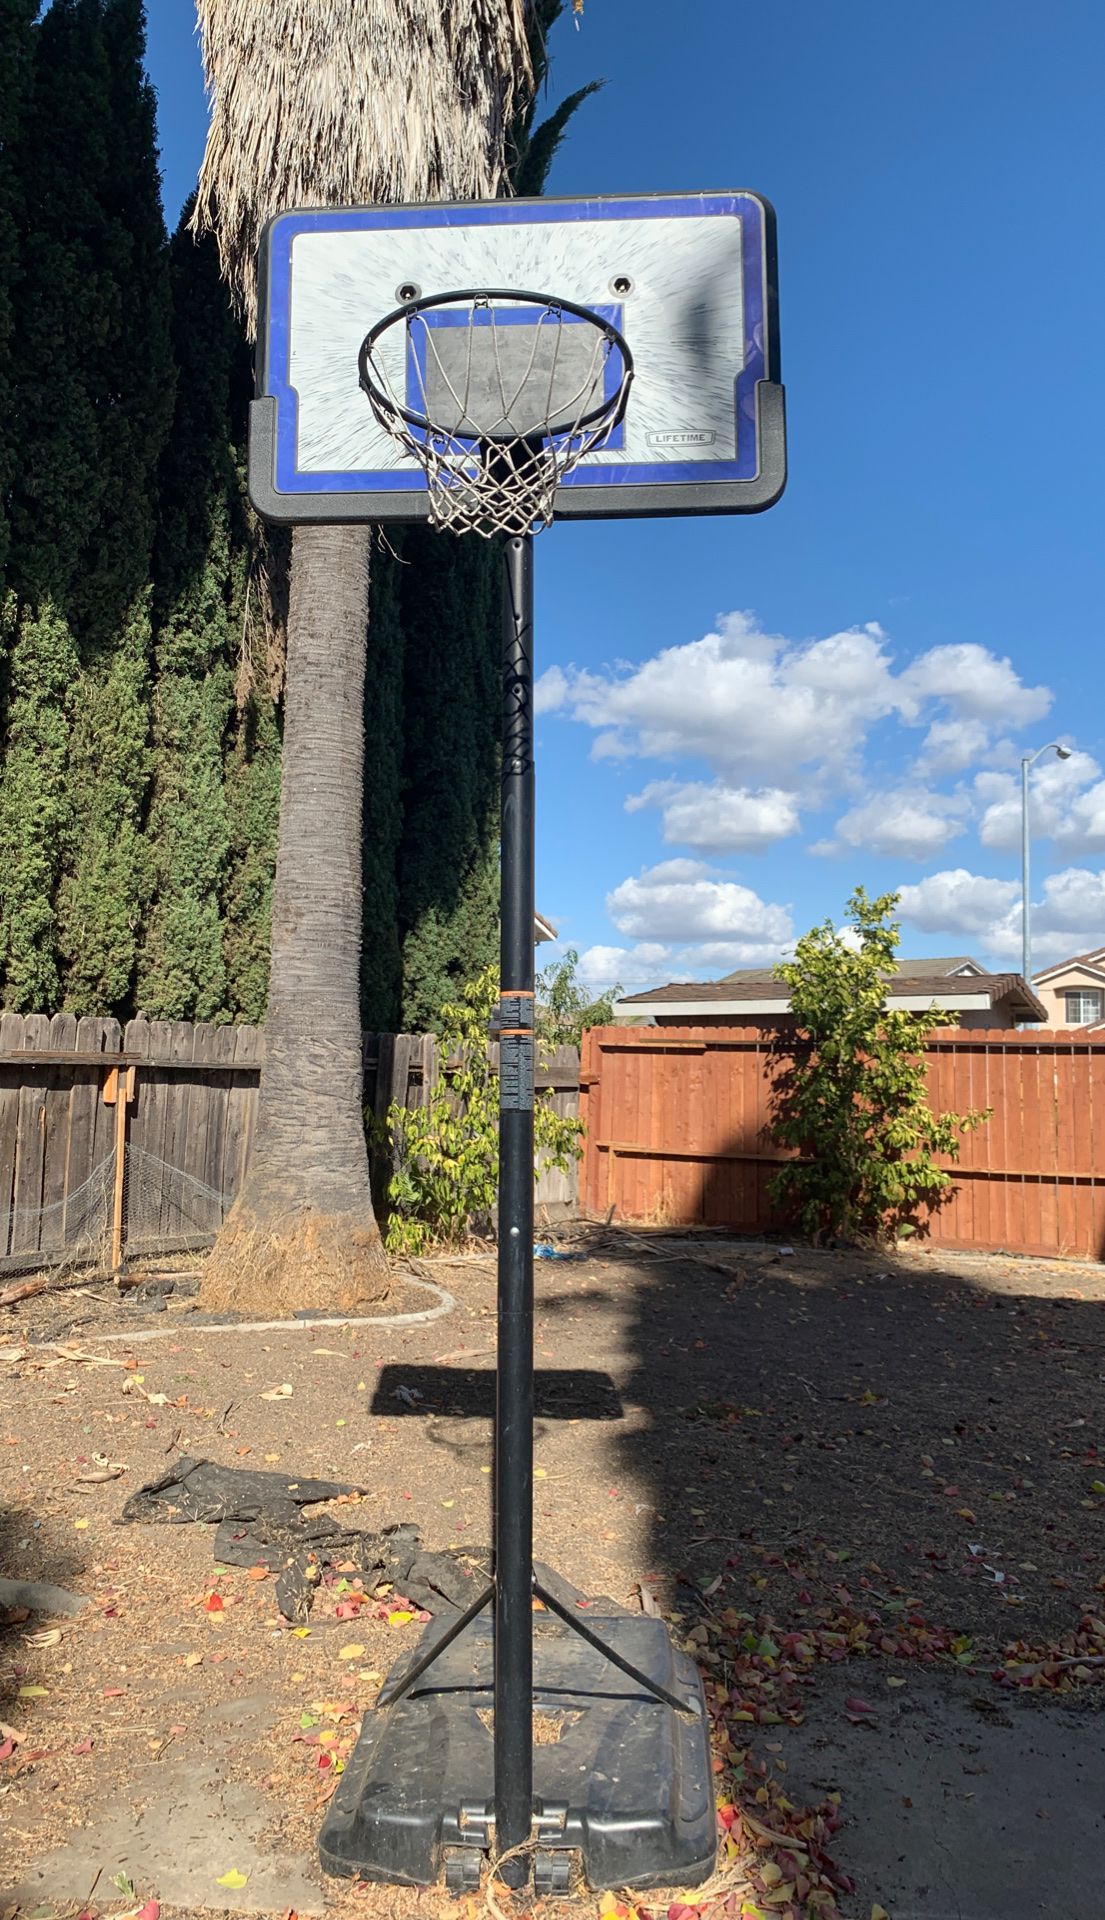 LifeTime basketball hoop